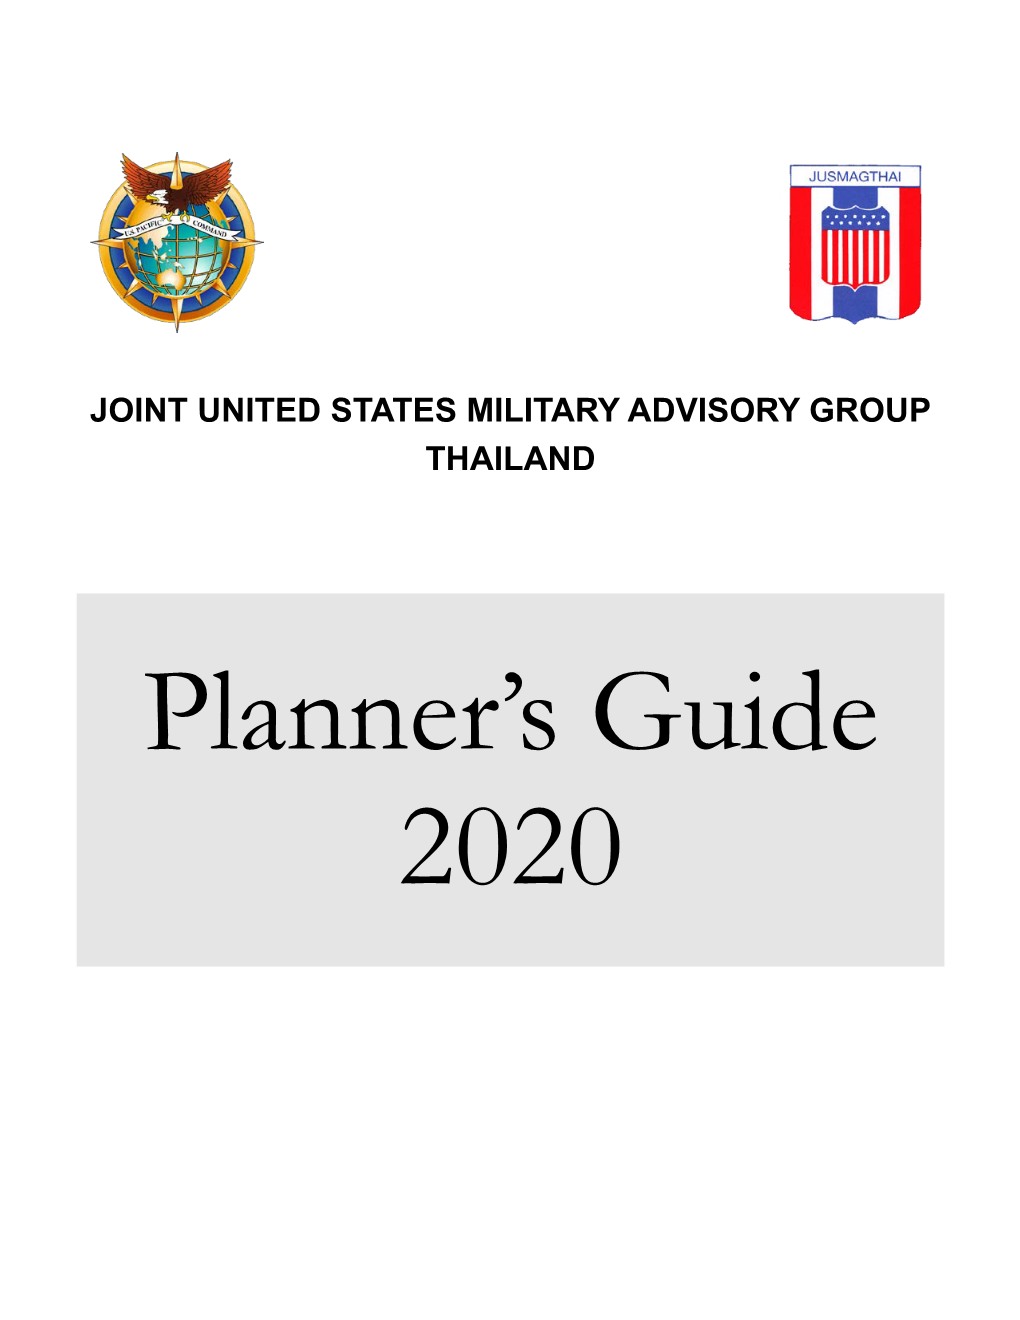 Joint United States Military Advisory Group Thailand